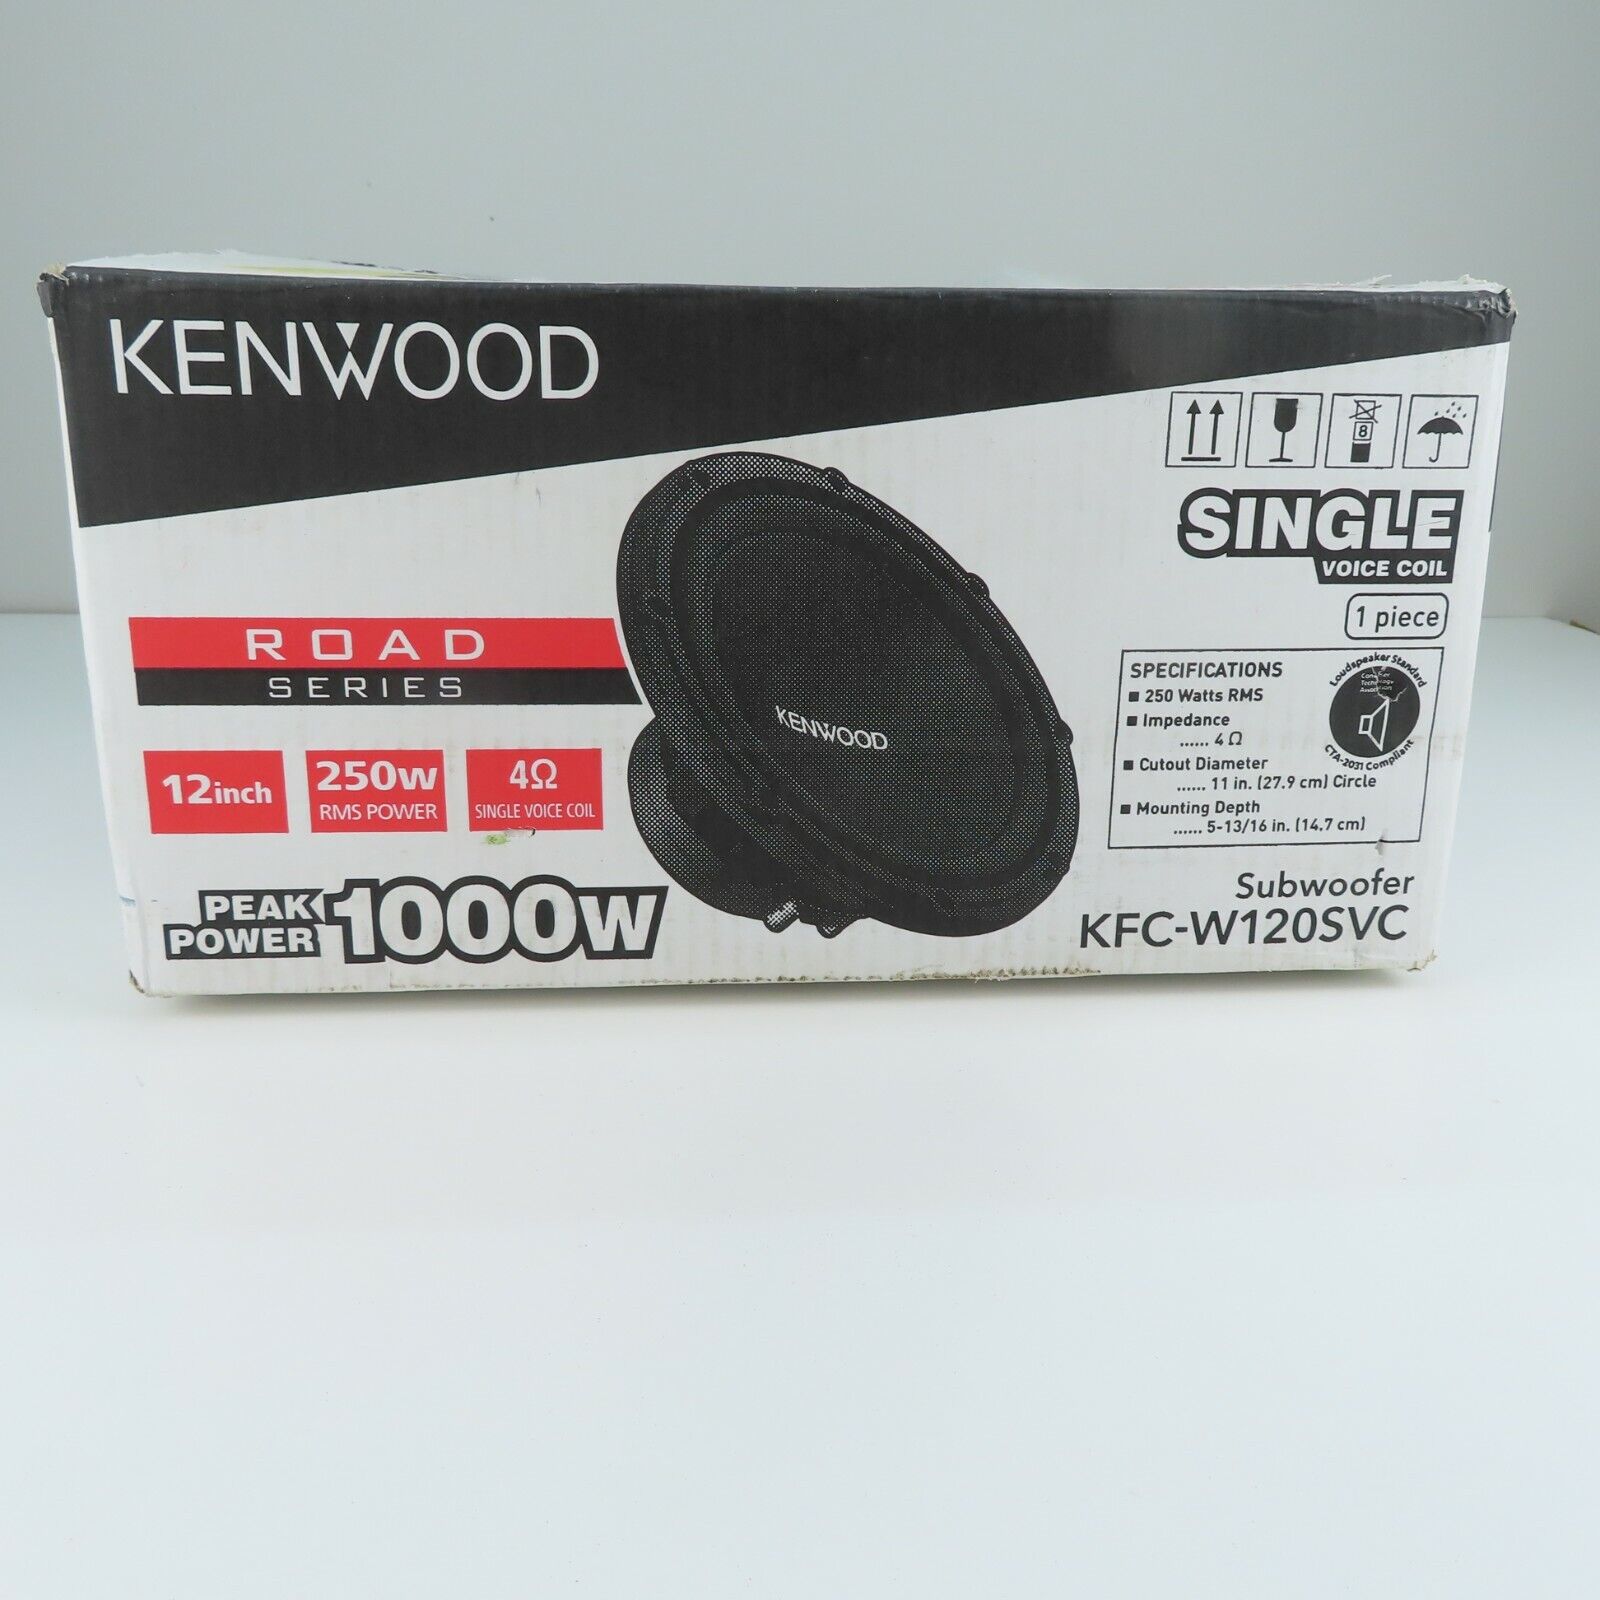 Kenwood KFC-W120SVC Road Series 12 inch 250W Subwoofer for sale online |  eBay